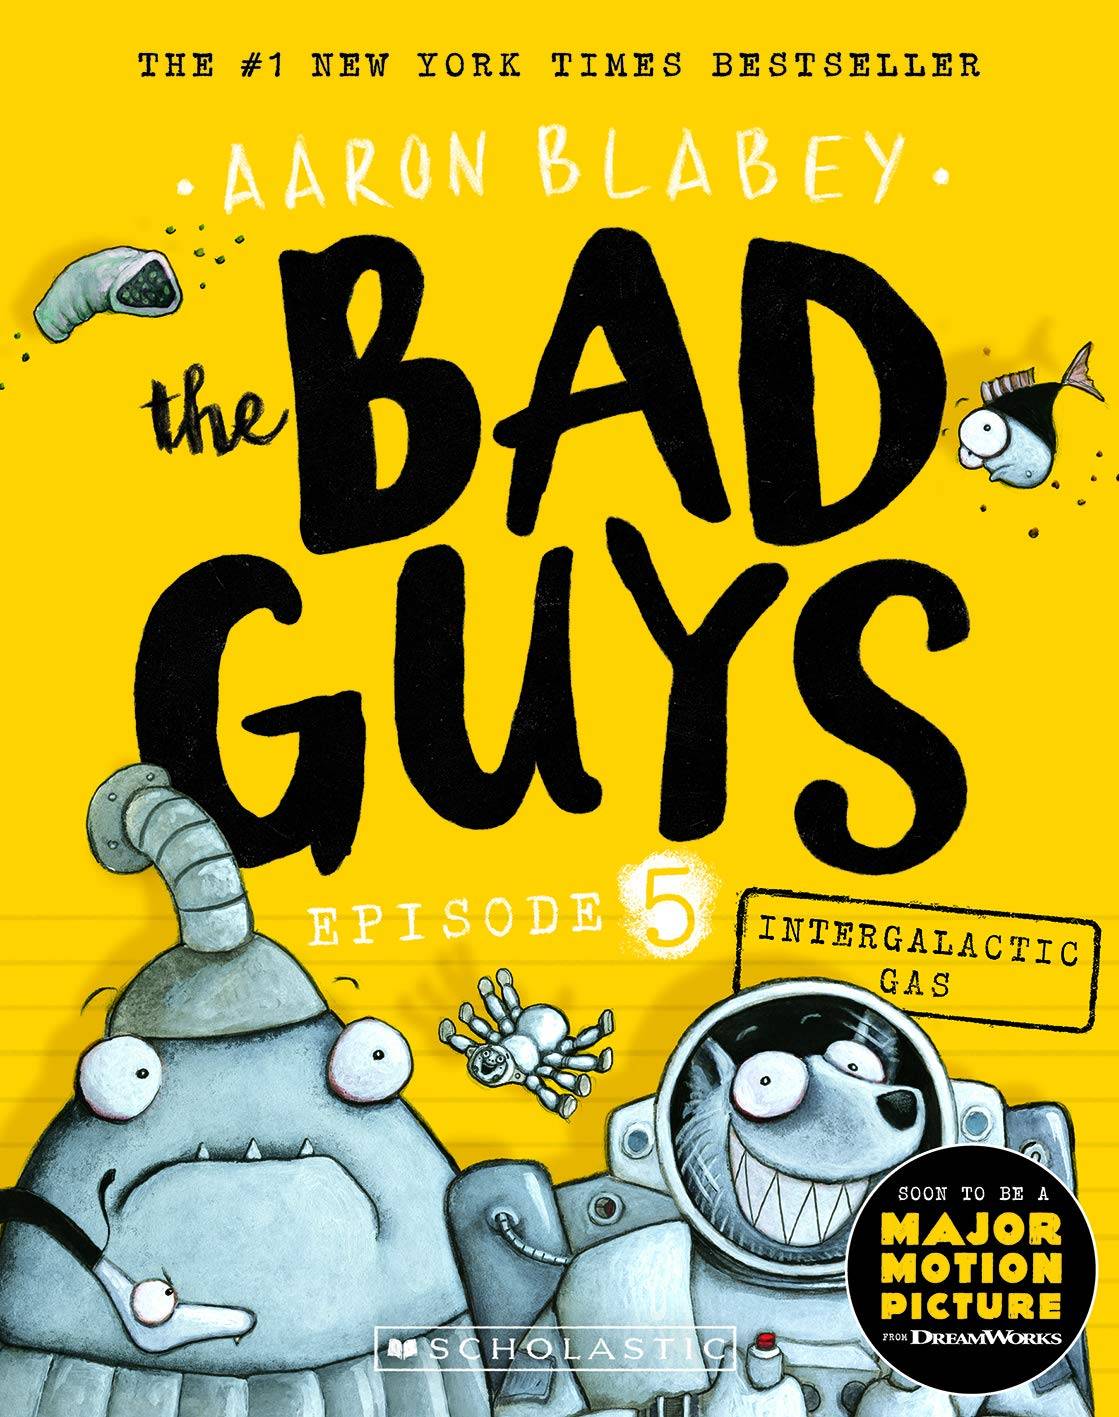 IMG : The Bad Guys- Episode 5